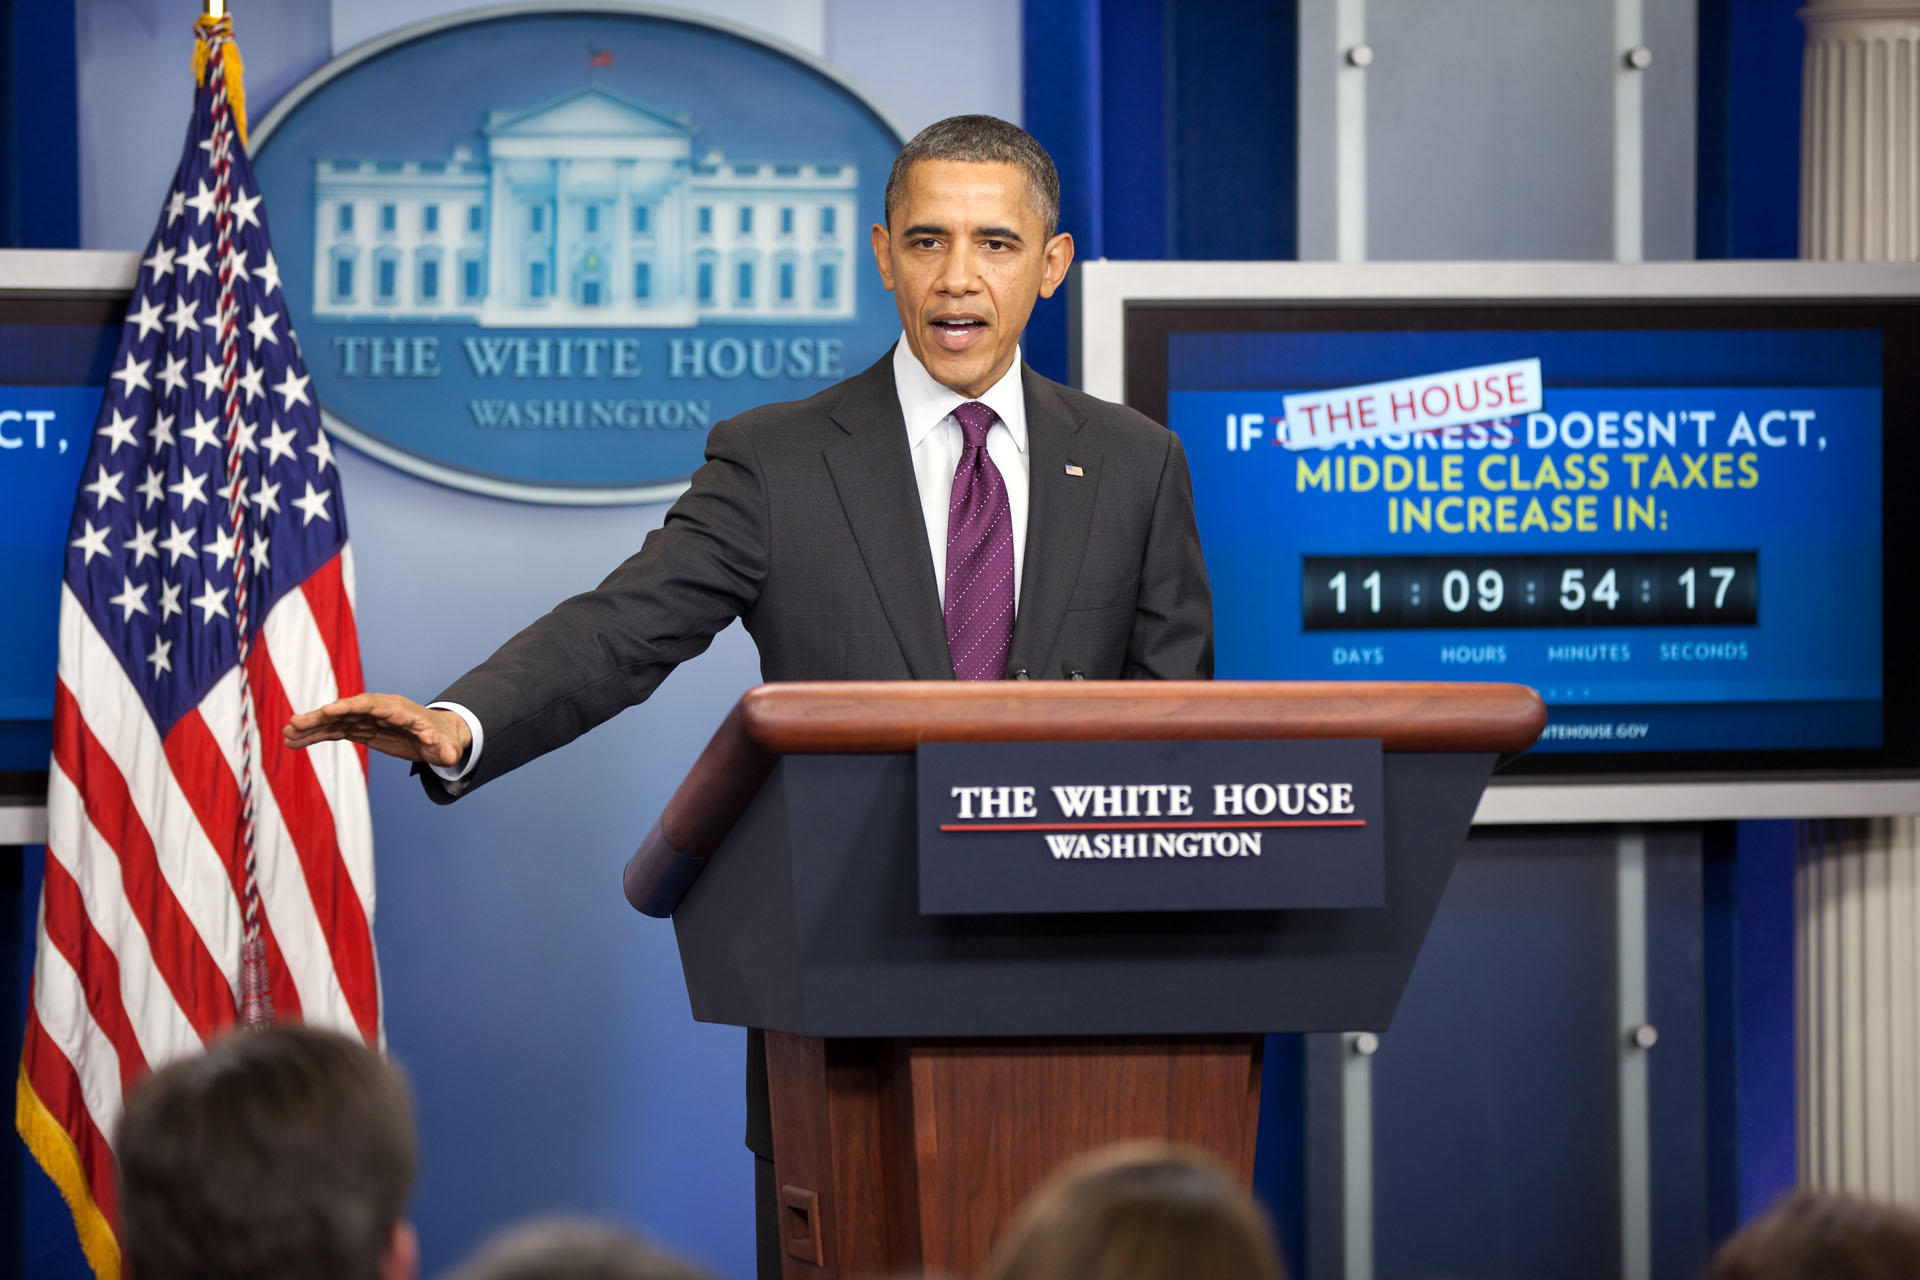 President Obama speaks on the payroll tax cut